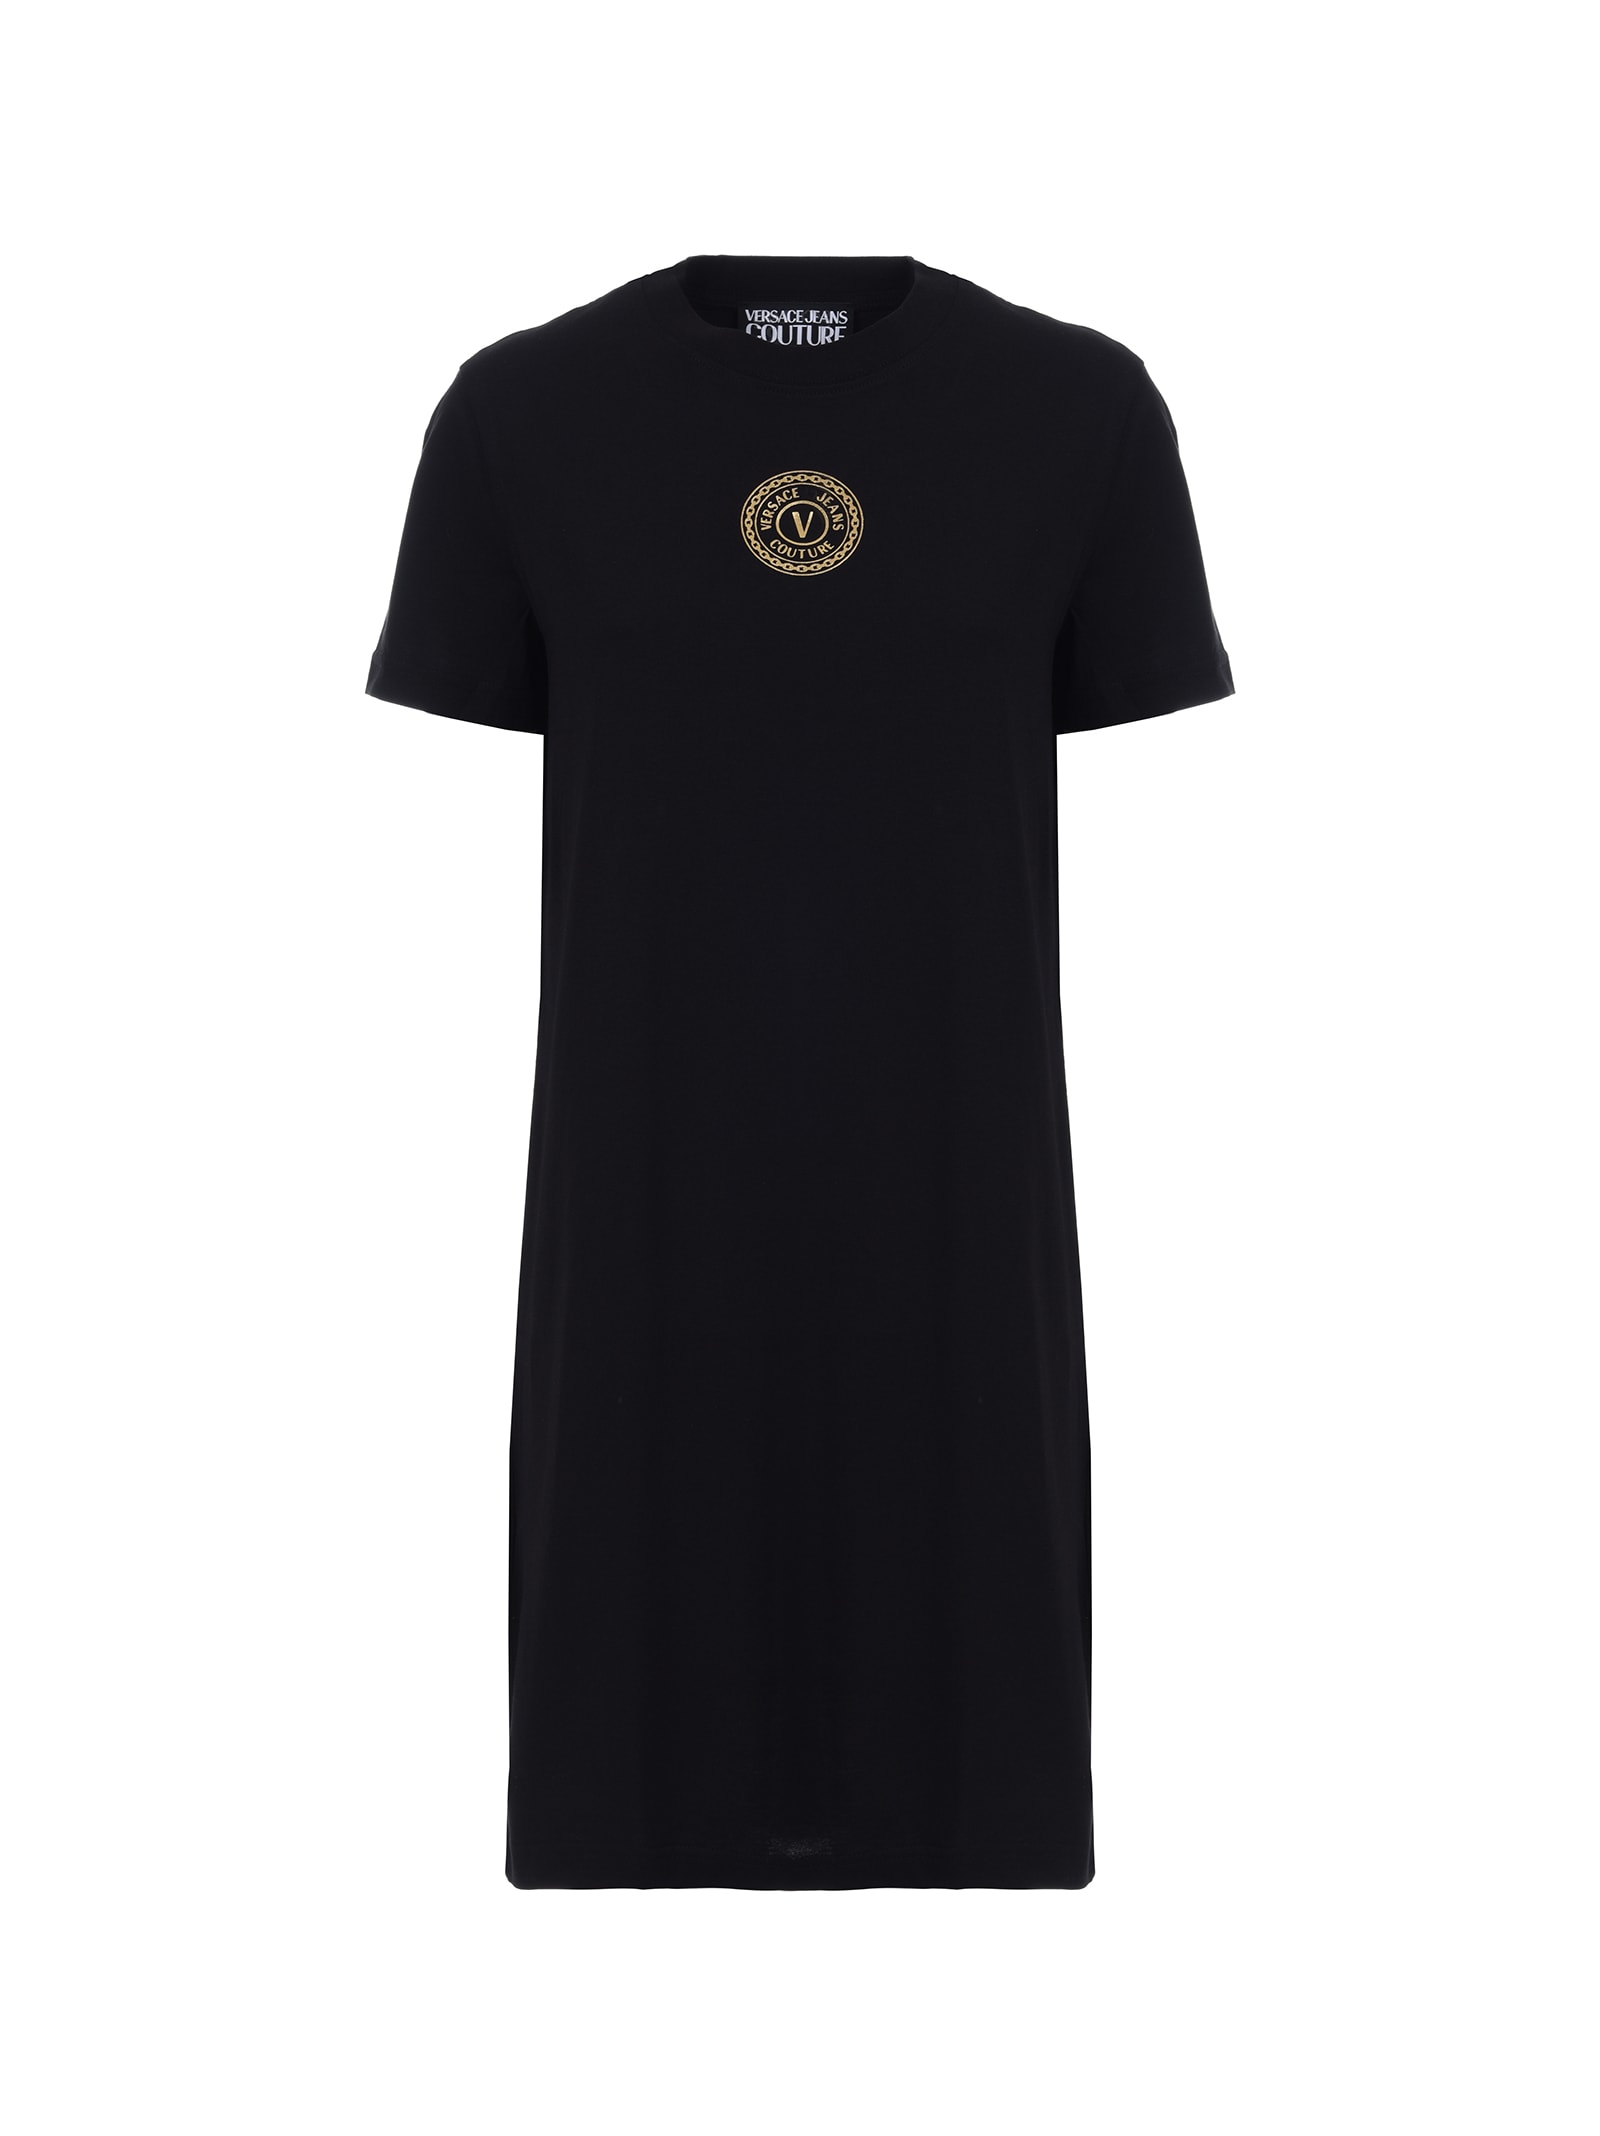 Versace Jeans Couture Black Dress With Gold Emblem Logo